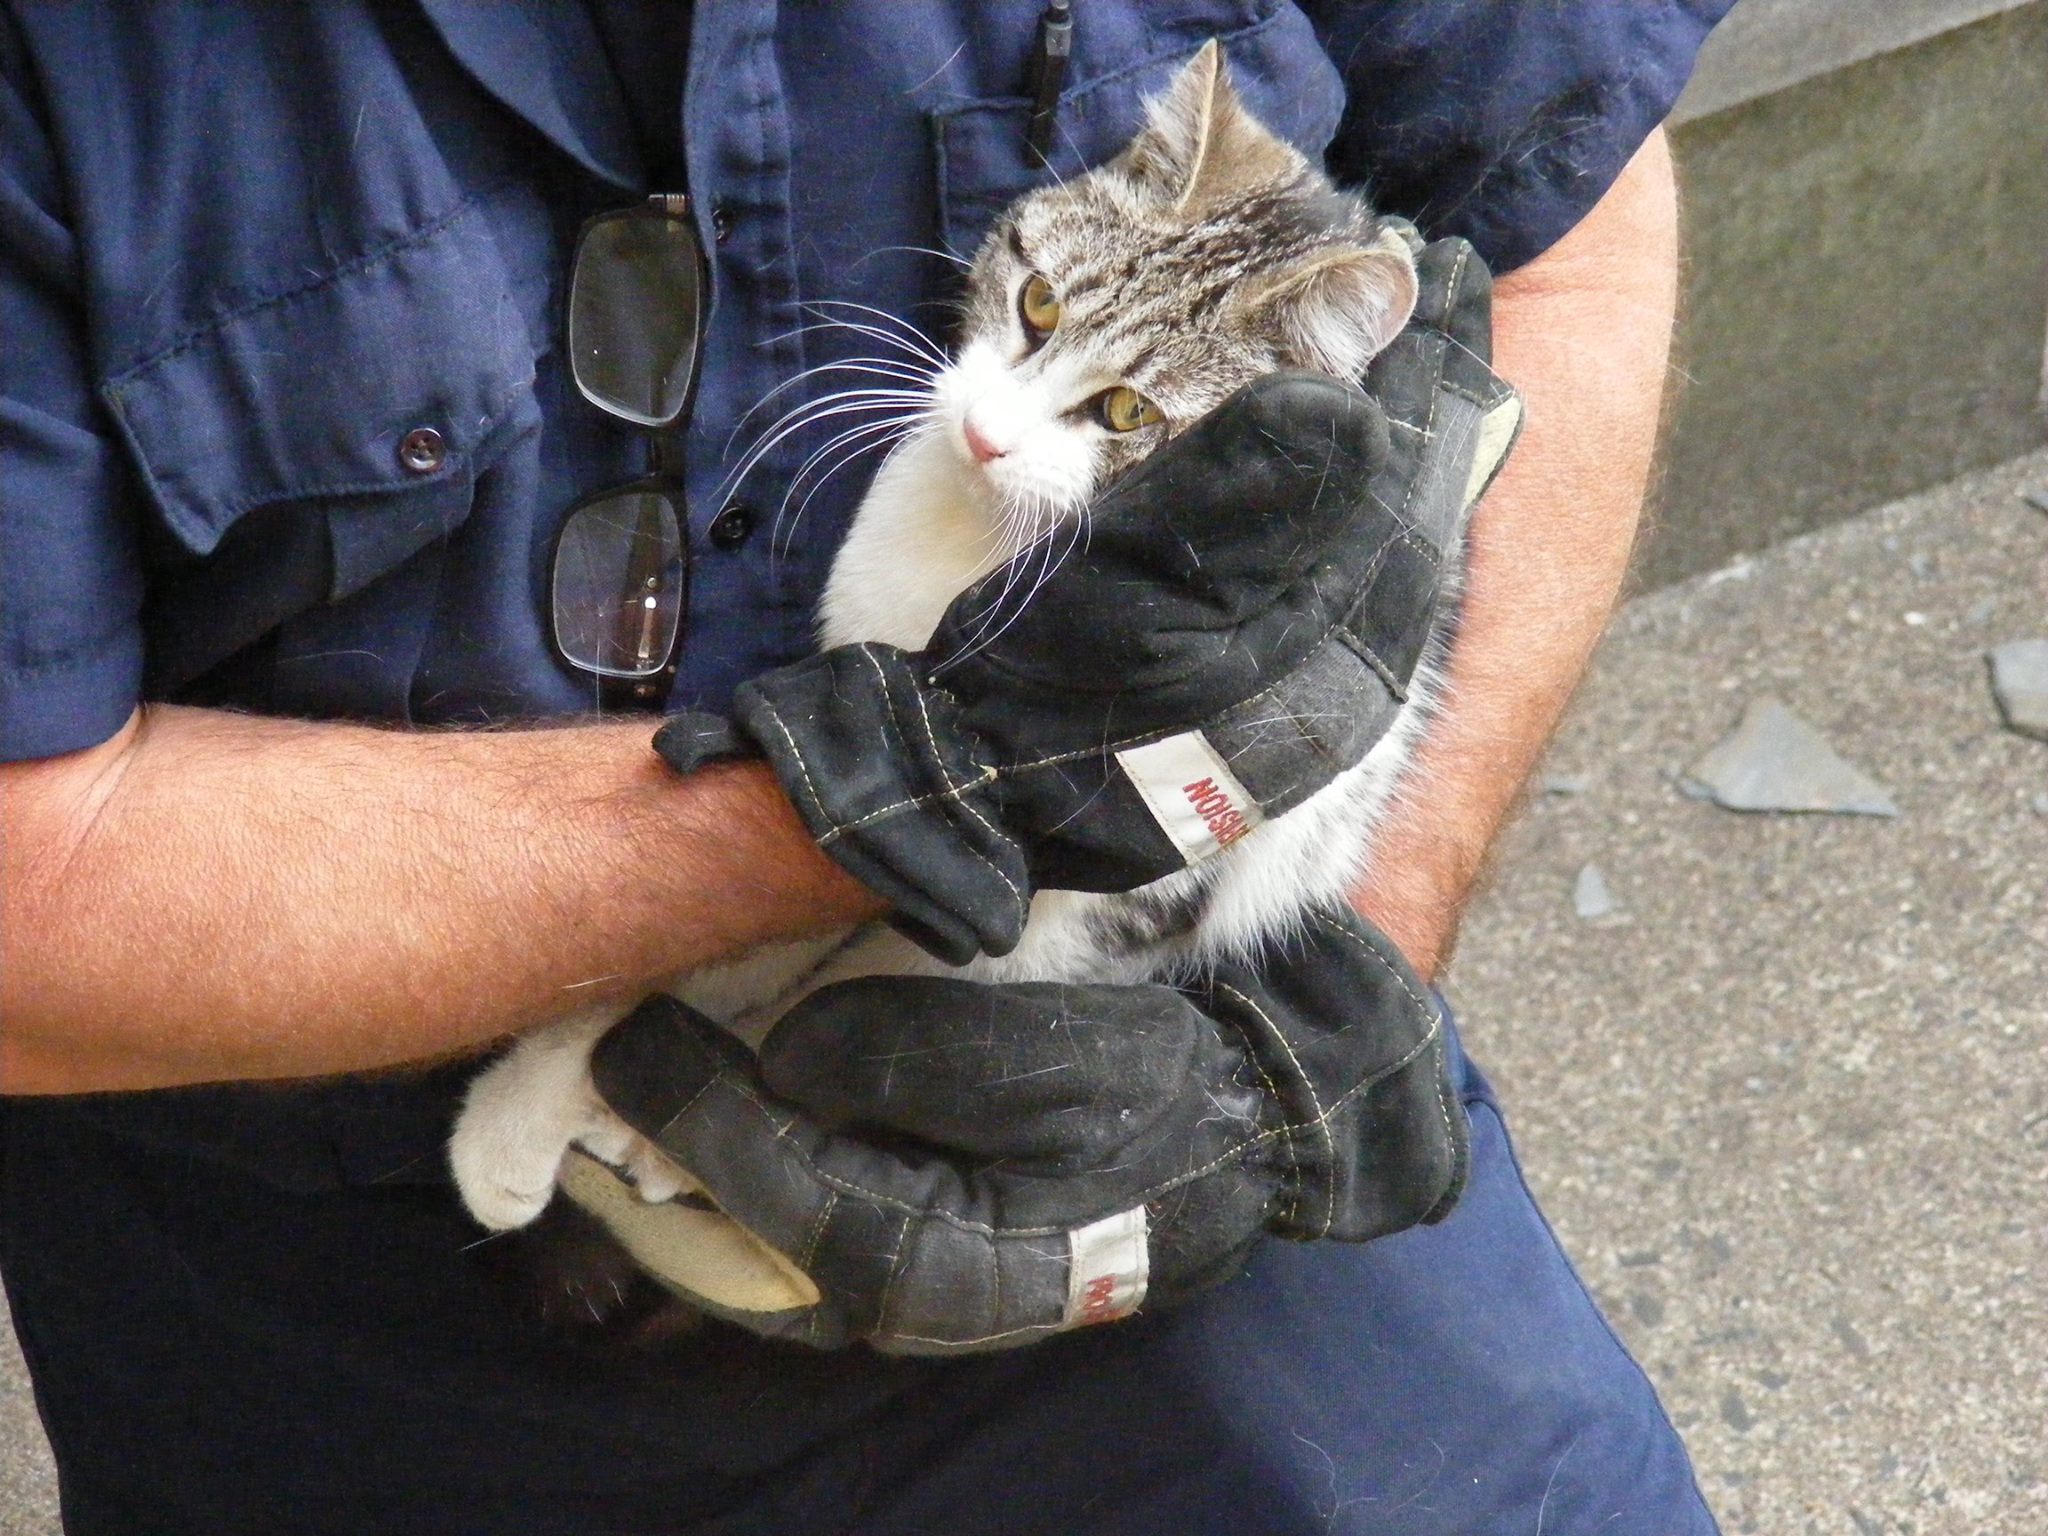 Ridgewood Firefighter rescues cat